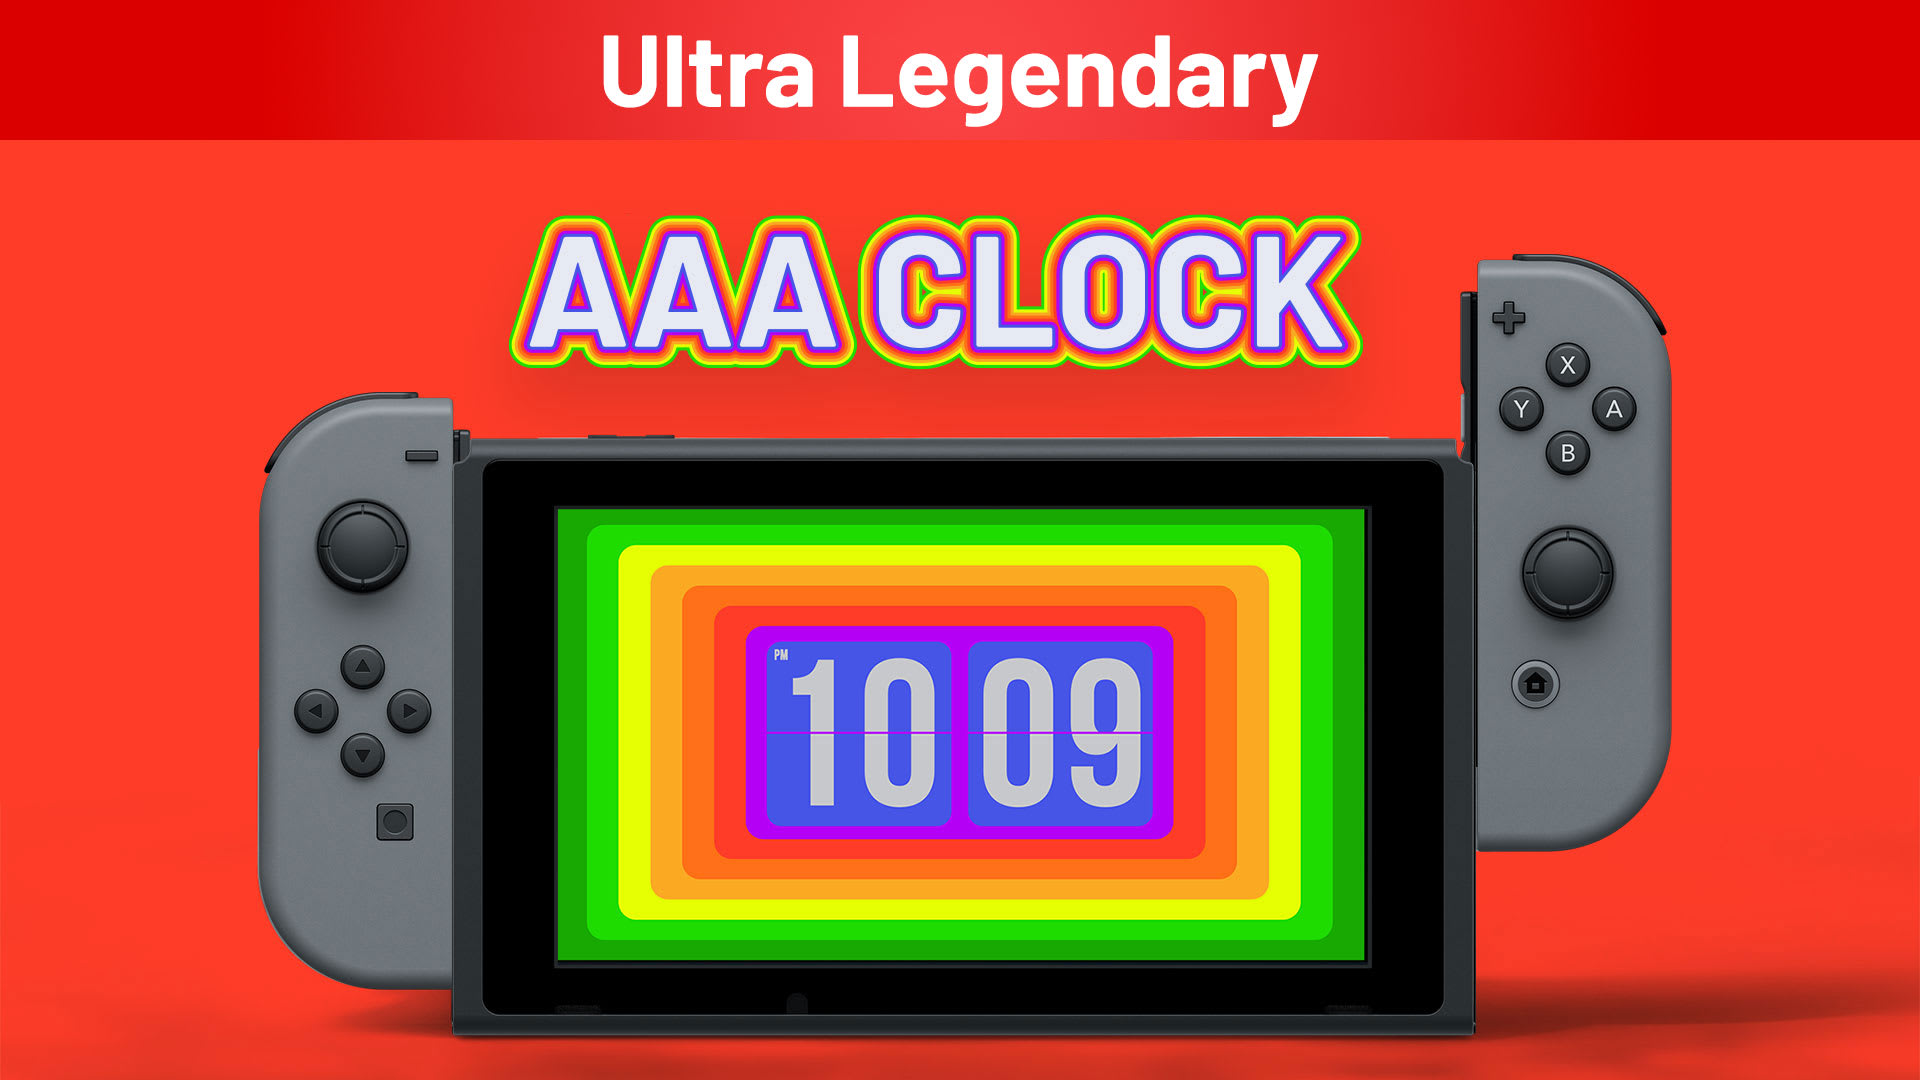 AAA Clock Ultra Legendary